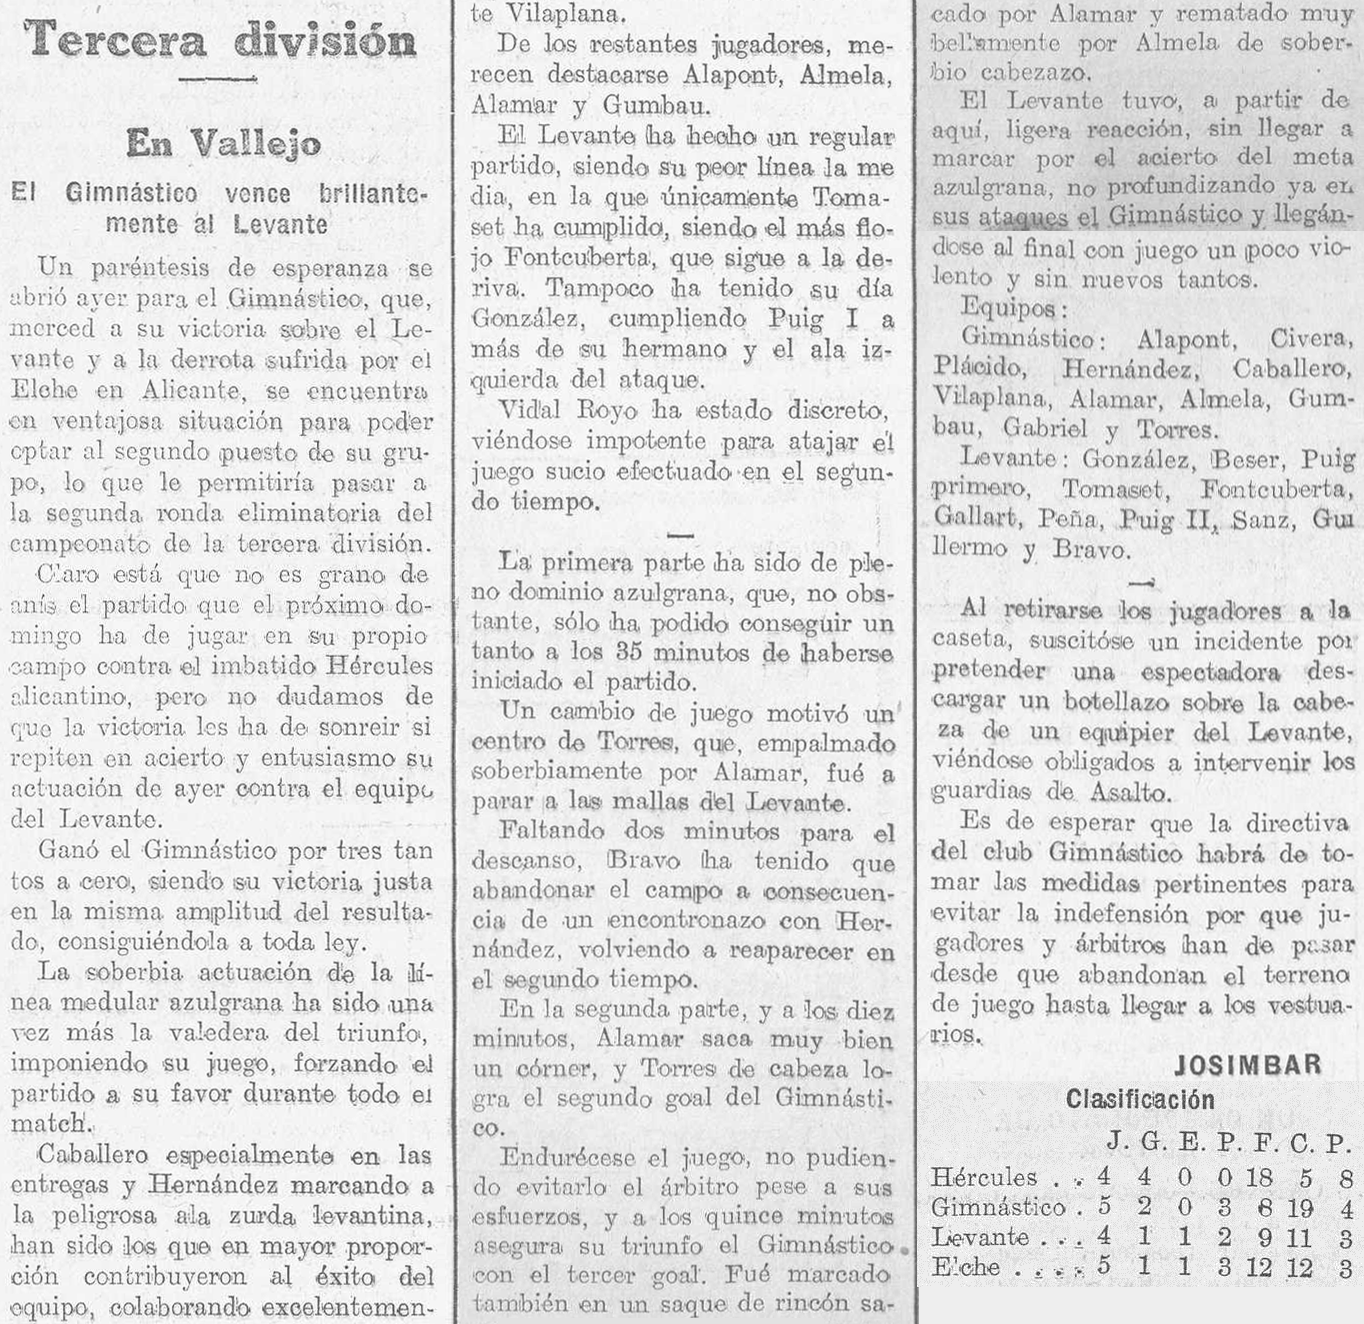 1933.01.08 (8 января 1933), Гимнастико - Леванте, 3-0.png